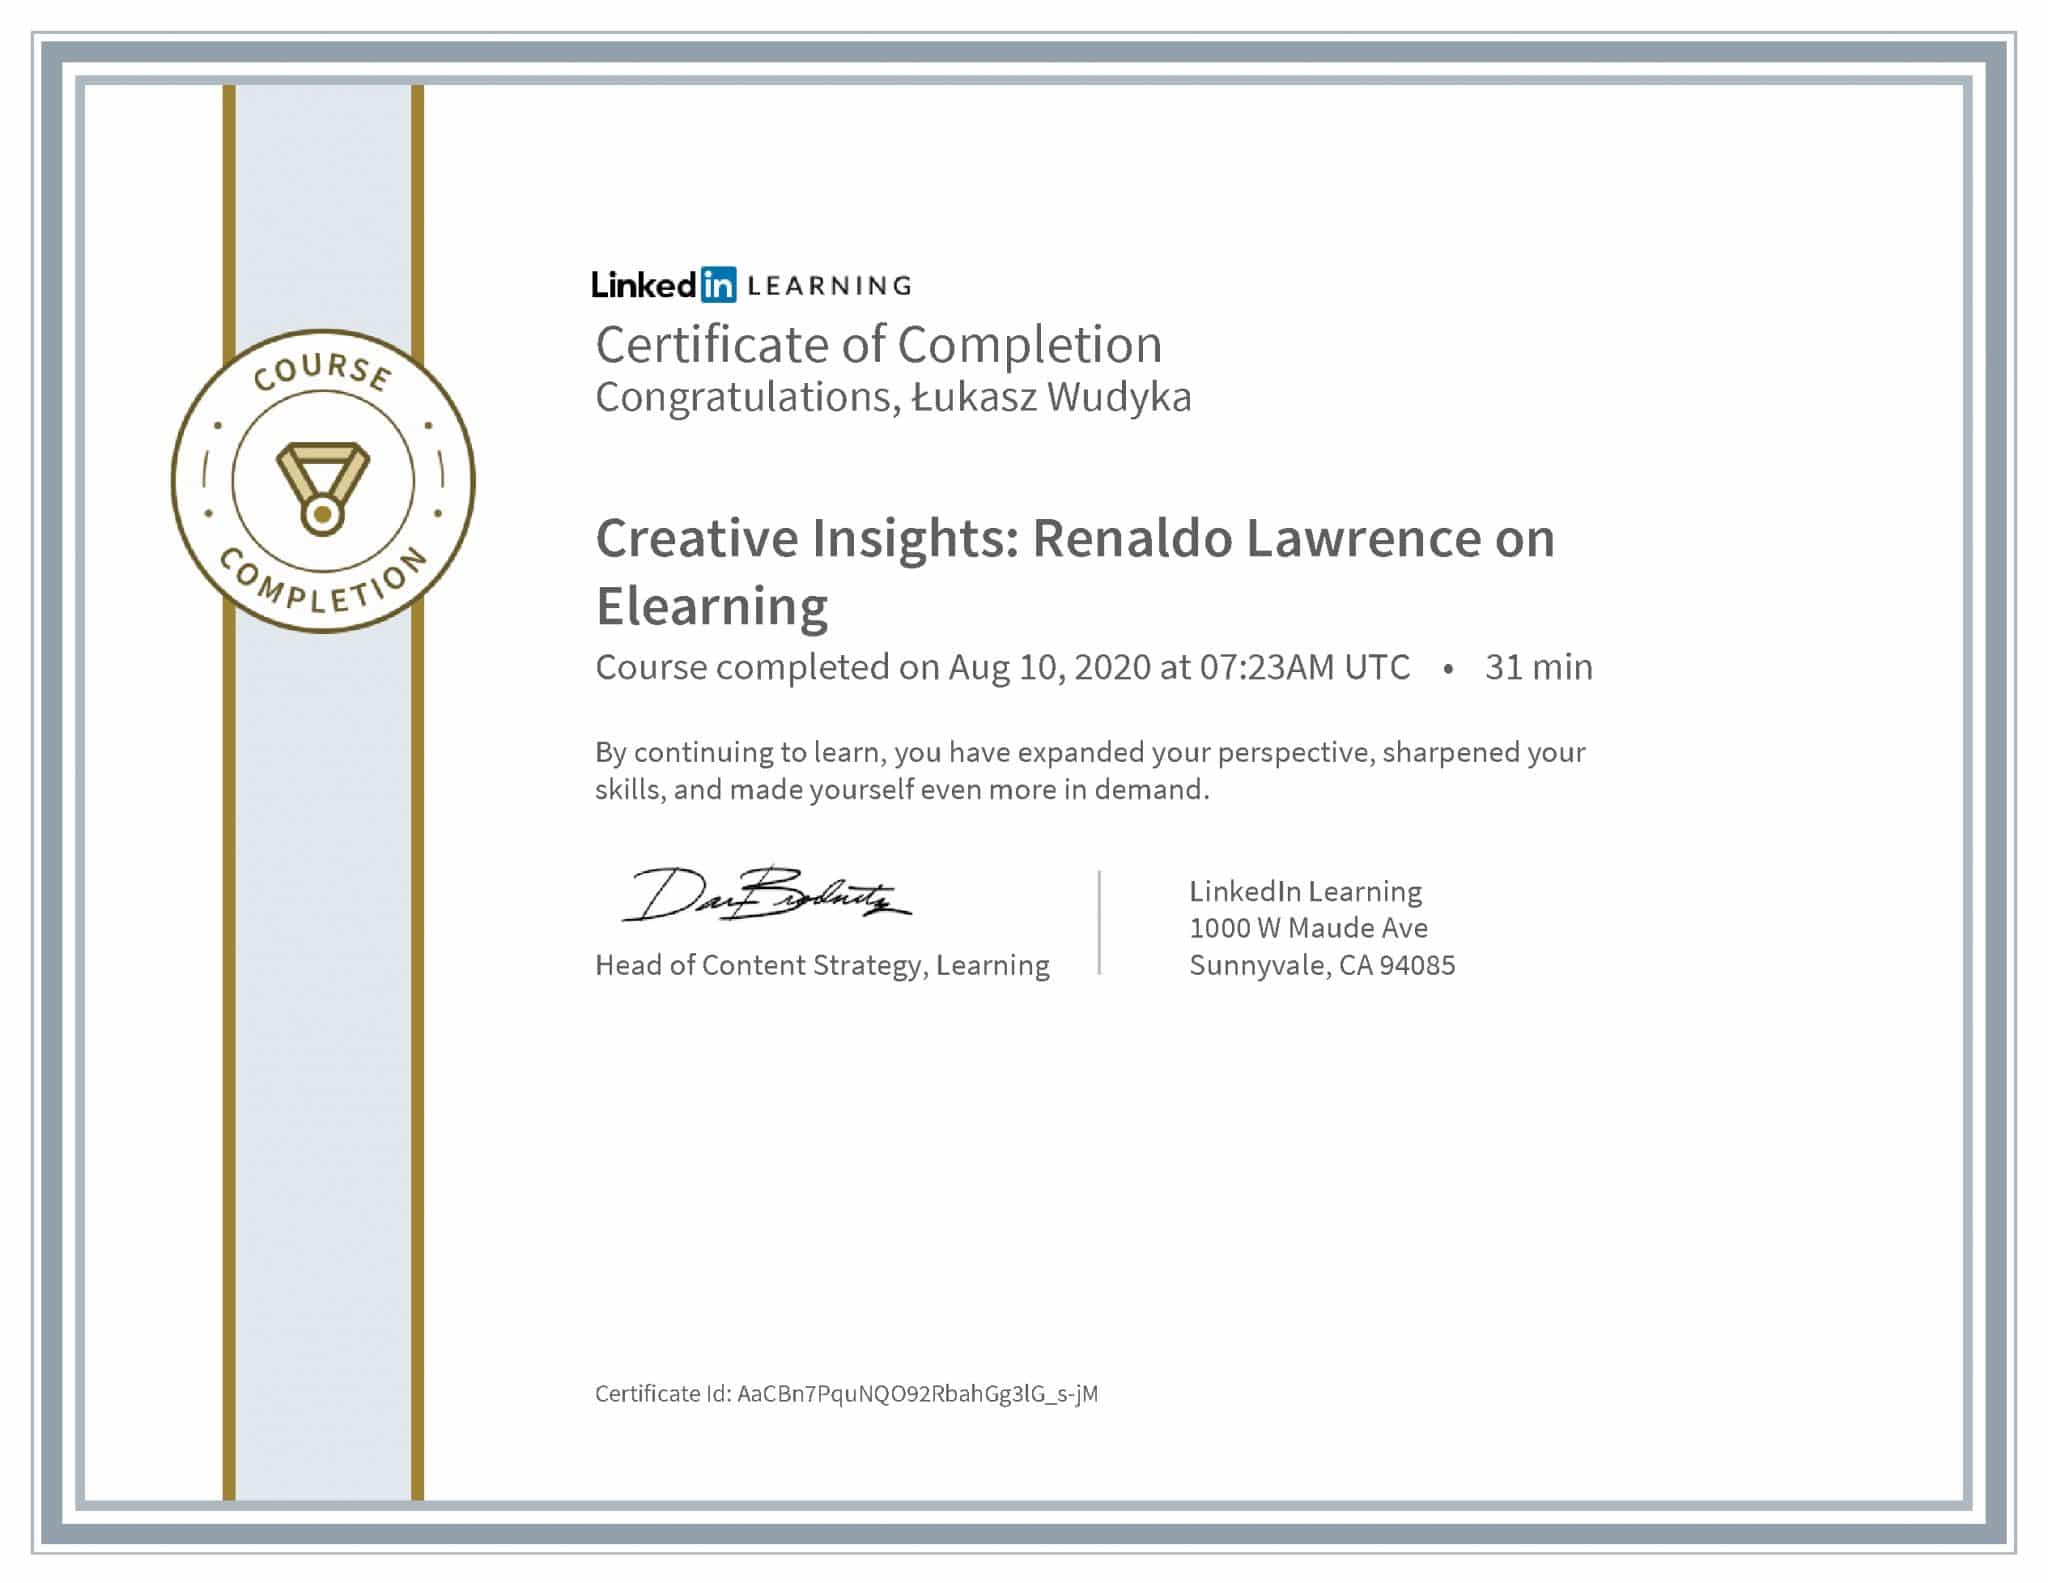 Łukasz Wudyka certyfikat LinkedIn Creative Insights: Renaldo Lawrence on Elearning